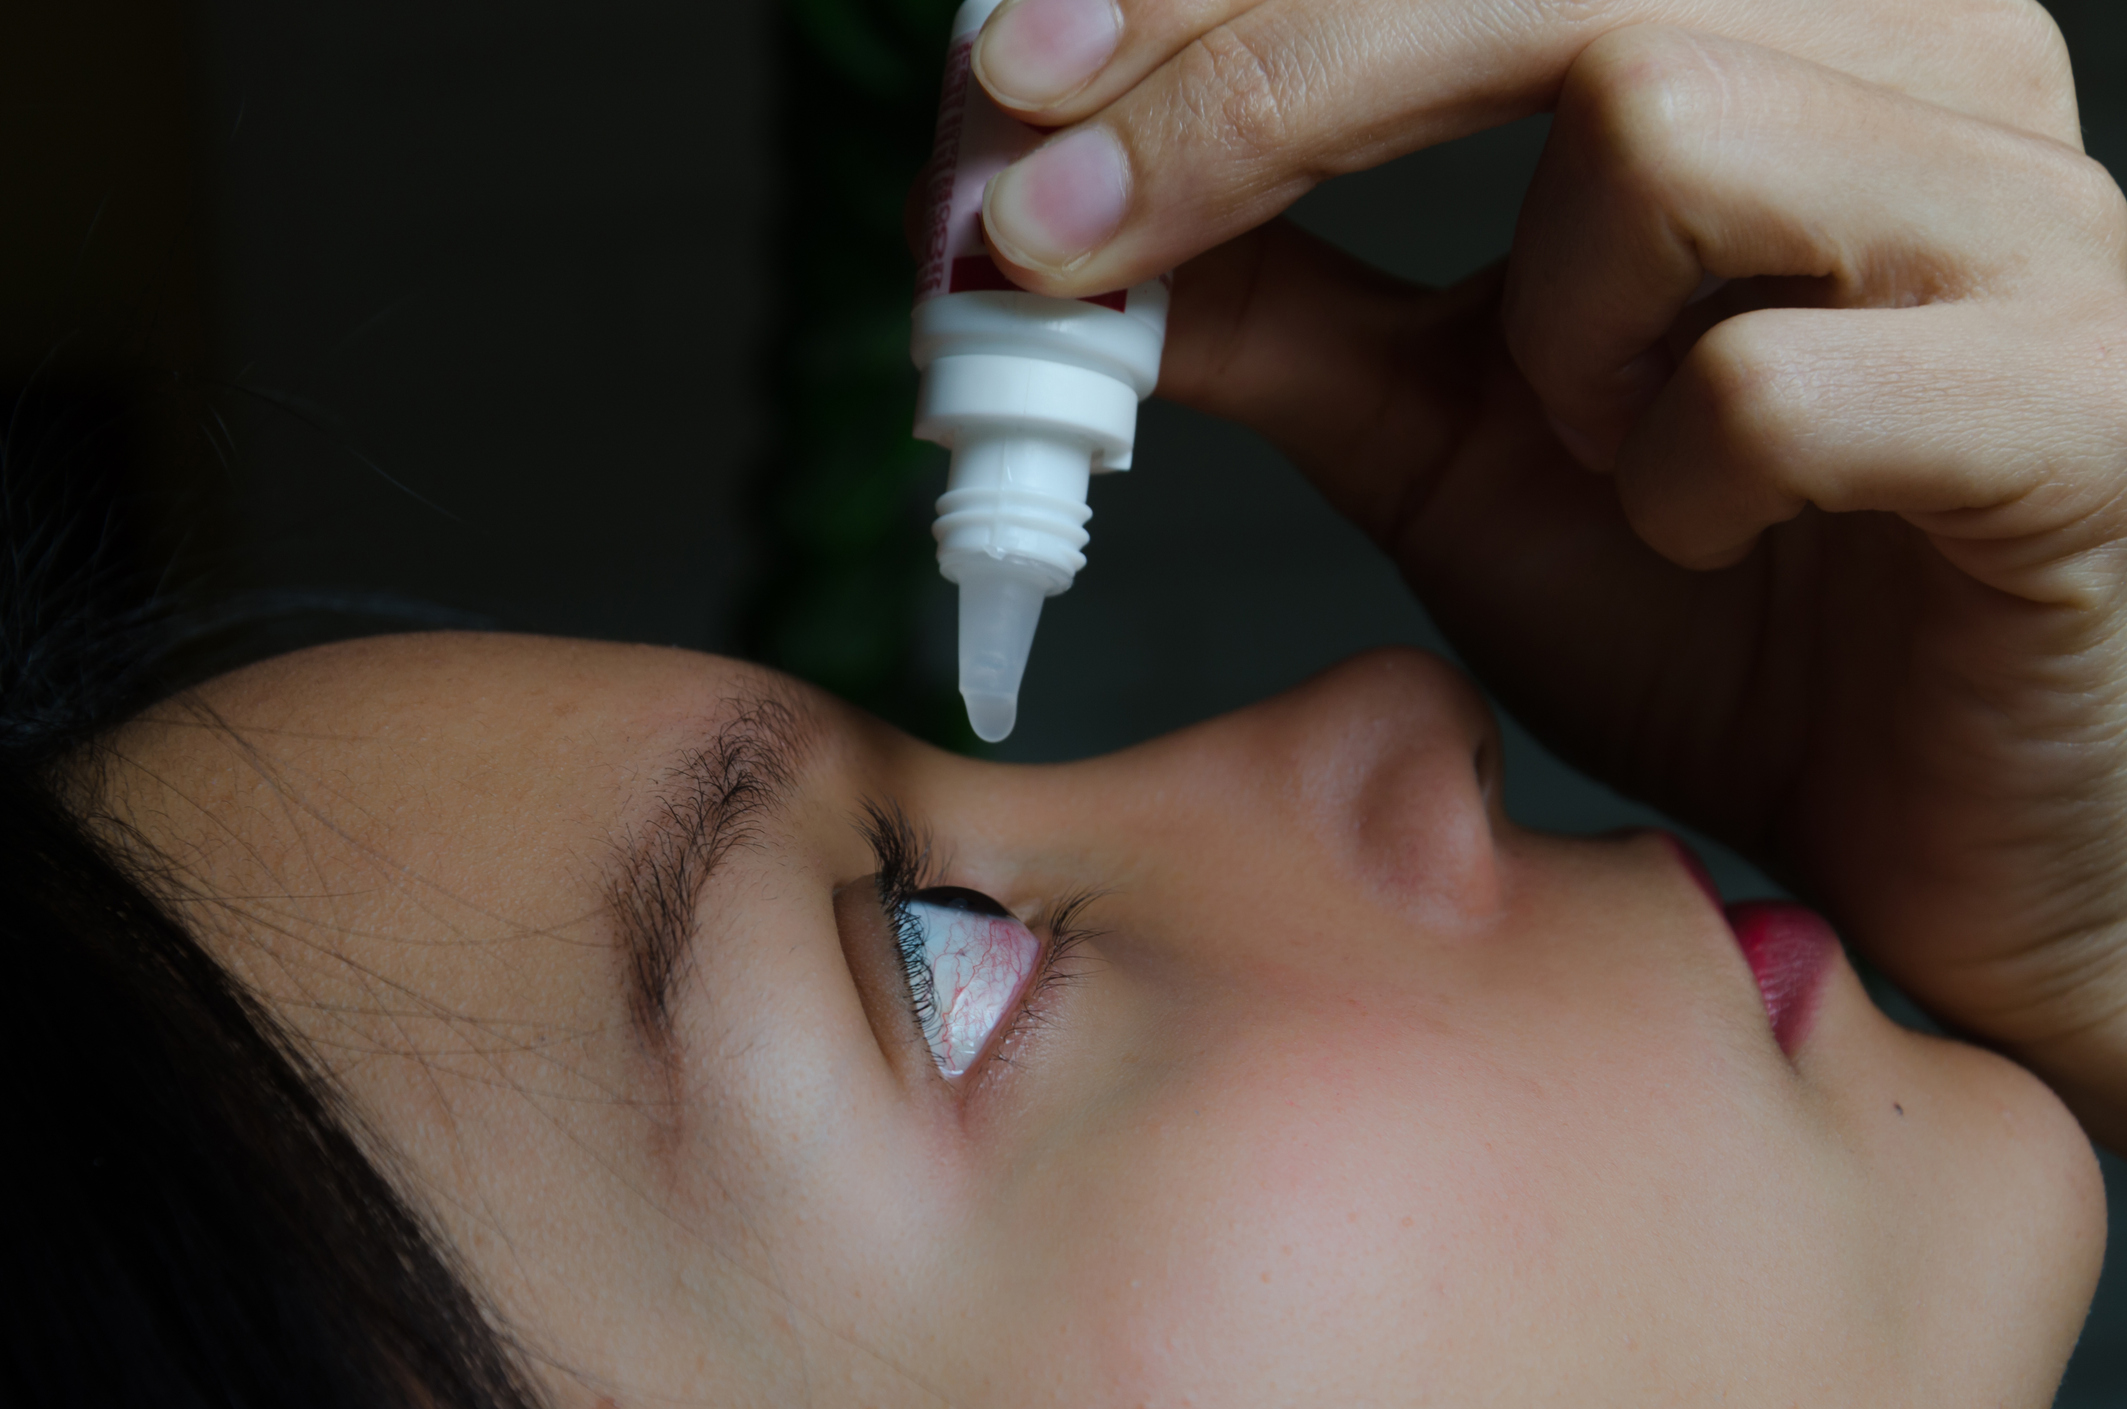 Woman applying eye-drops into her eye